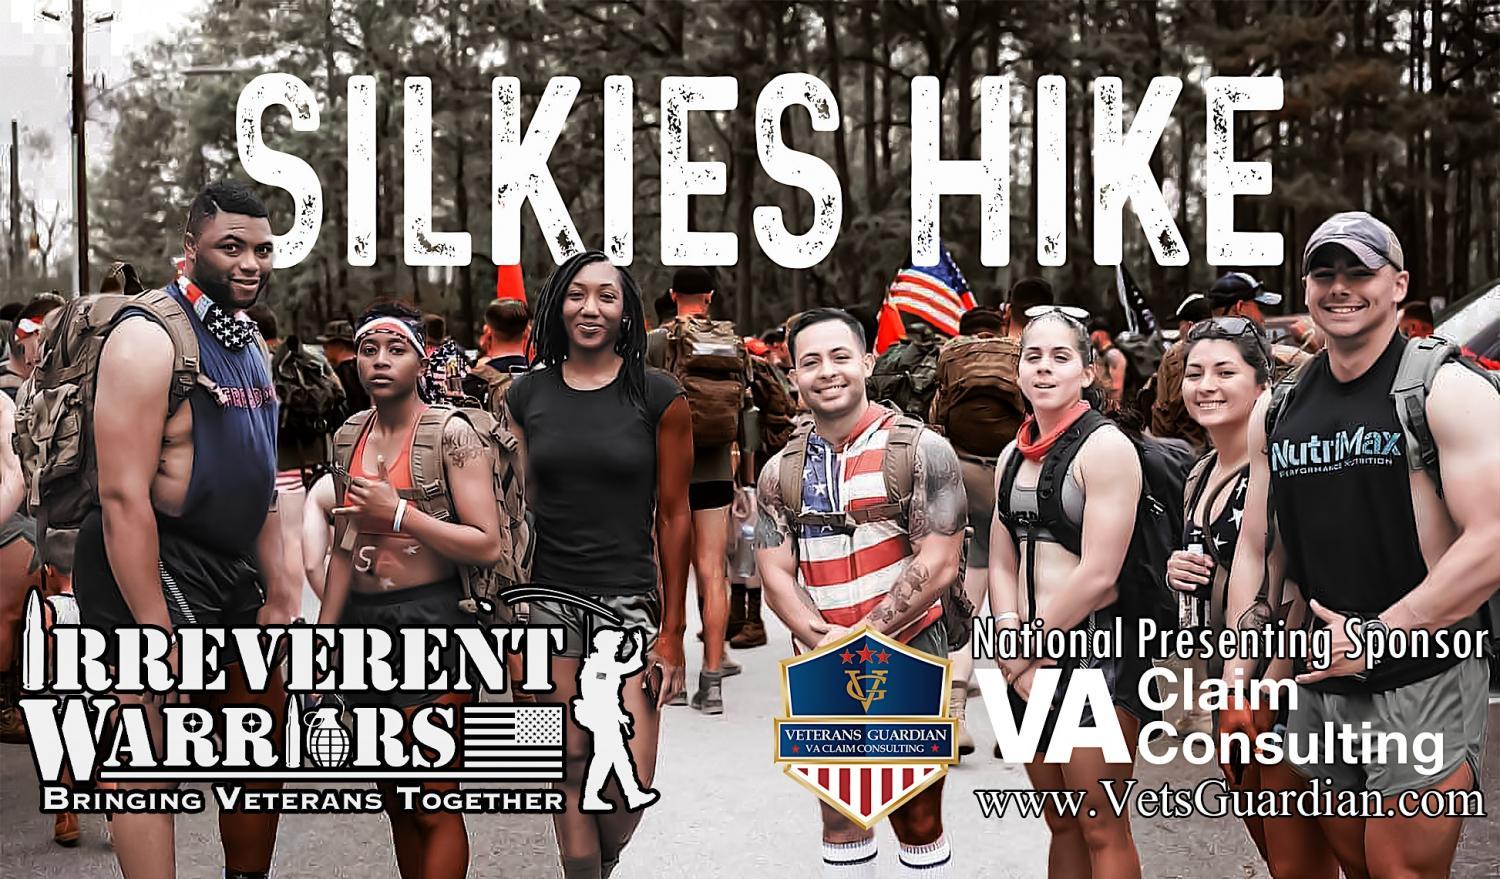 Irreverent Warriors Silkies Hike - Atlanta, GA
Sat Nov 12, 8:00 AM - Sat Nov 12, 5:00 PM
in 7 days